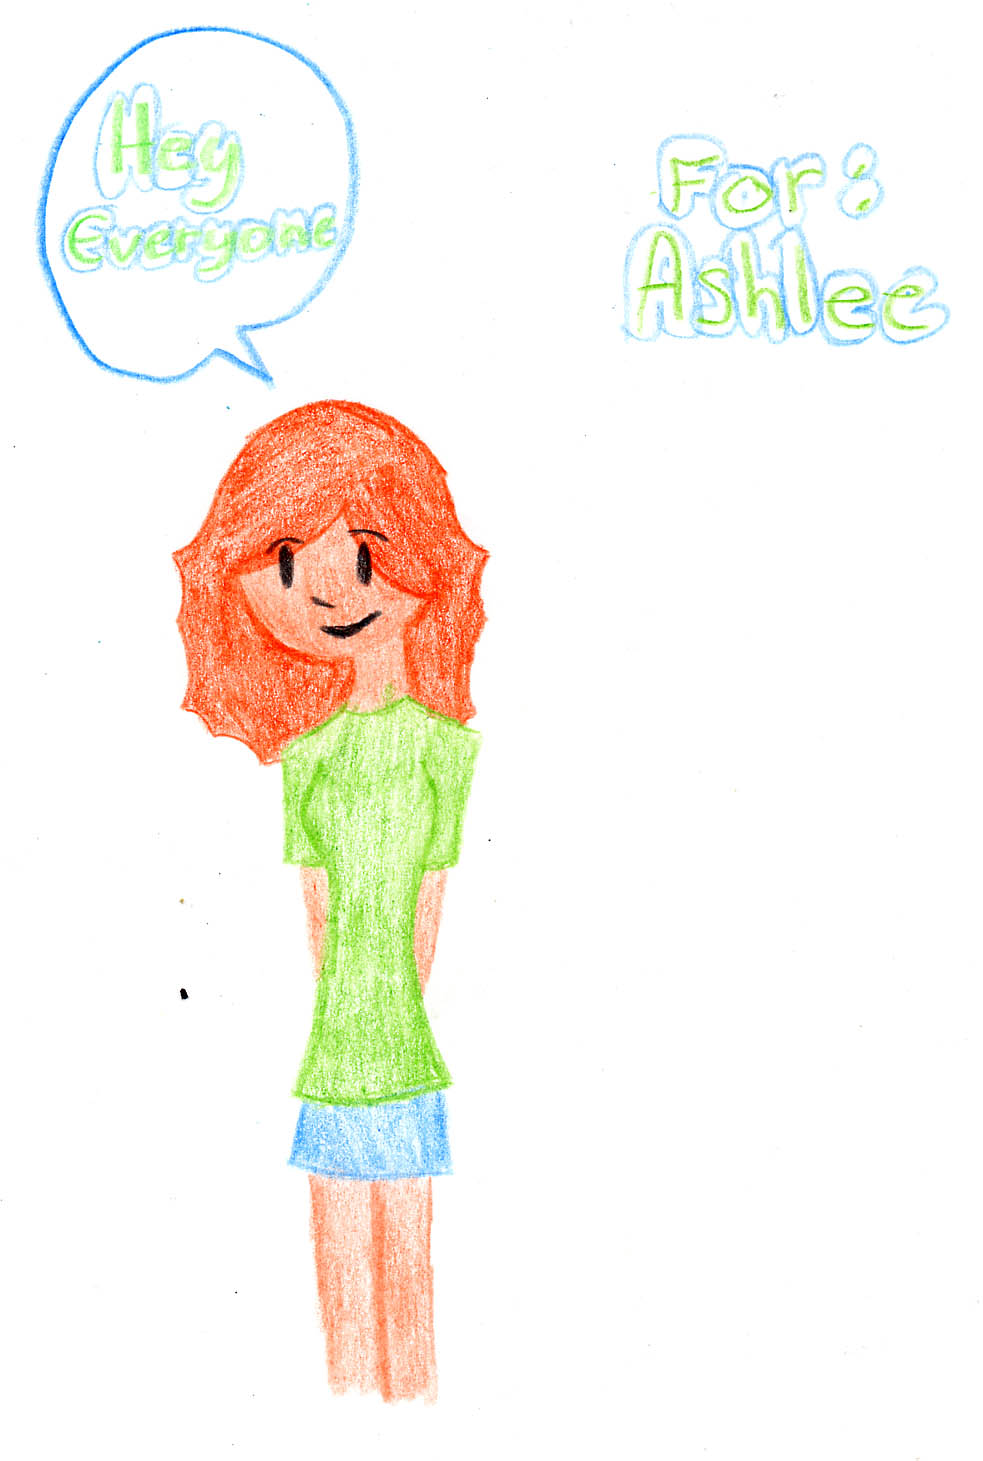 My Sister Ashlee by shorton1221